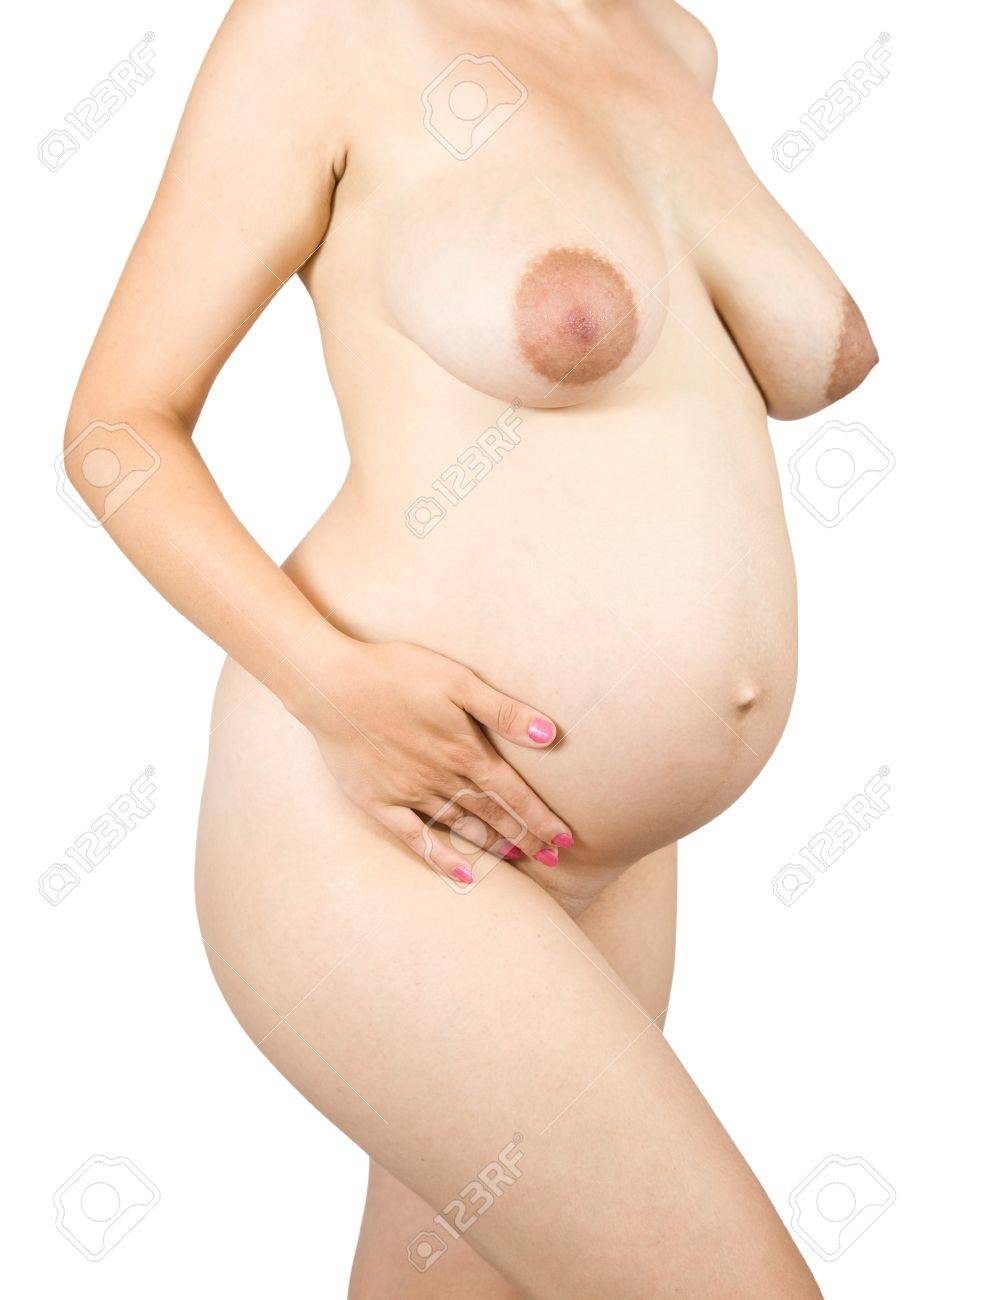 chona montilla recommends nude pregnant women pics pic